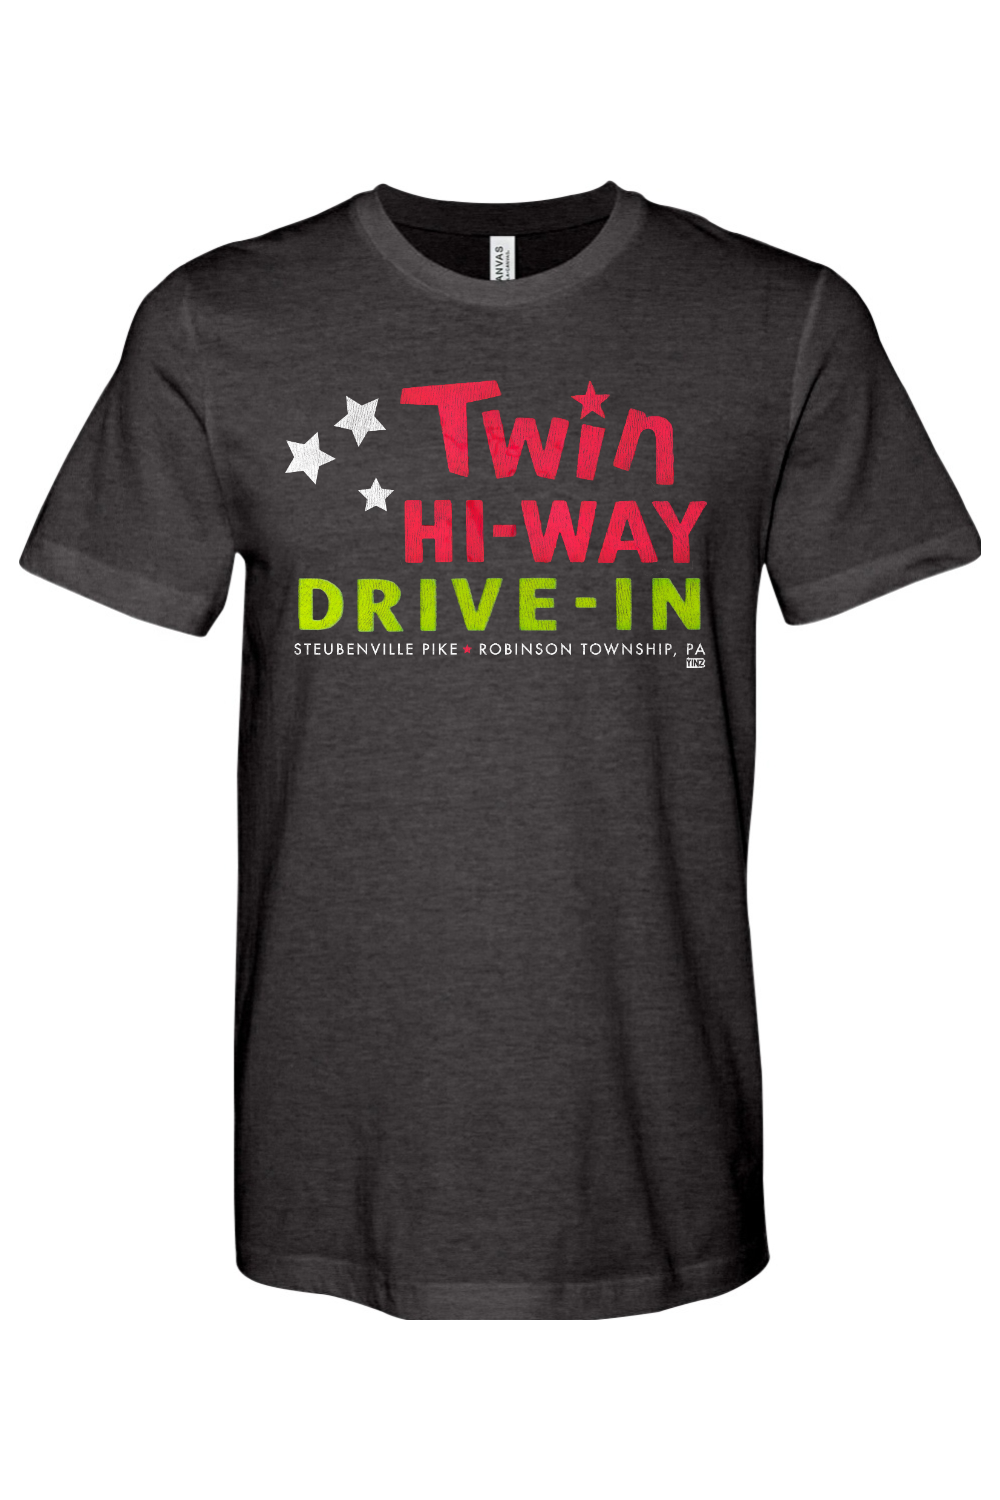 Twin Hi-Way Drive-In - Robinson Township - Yinzylvania